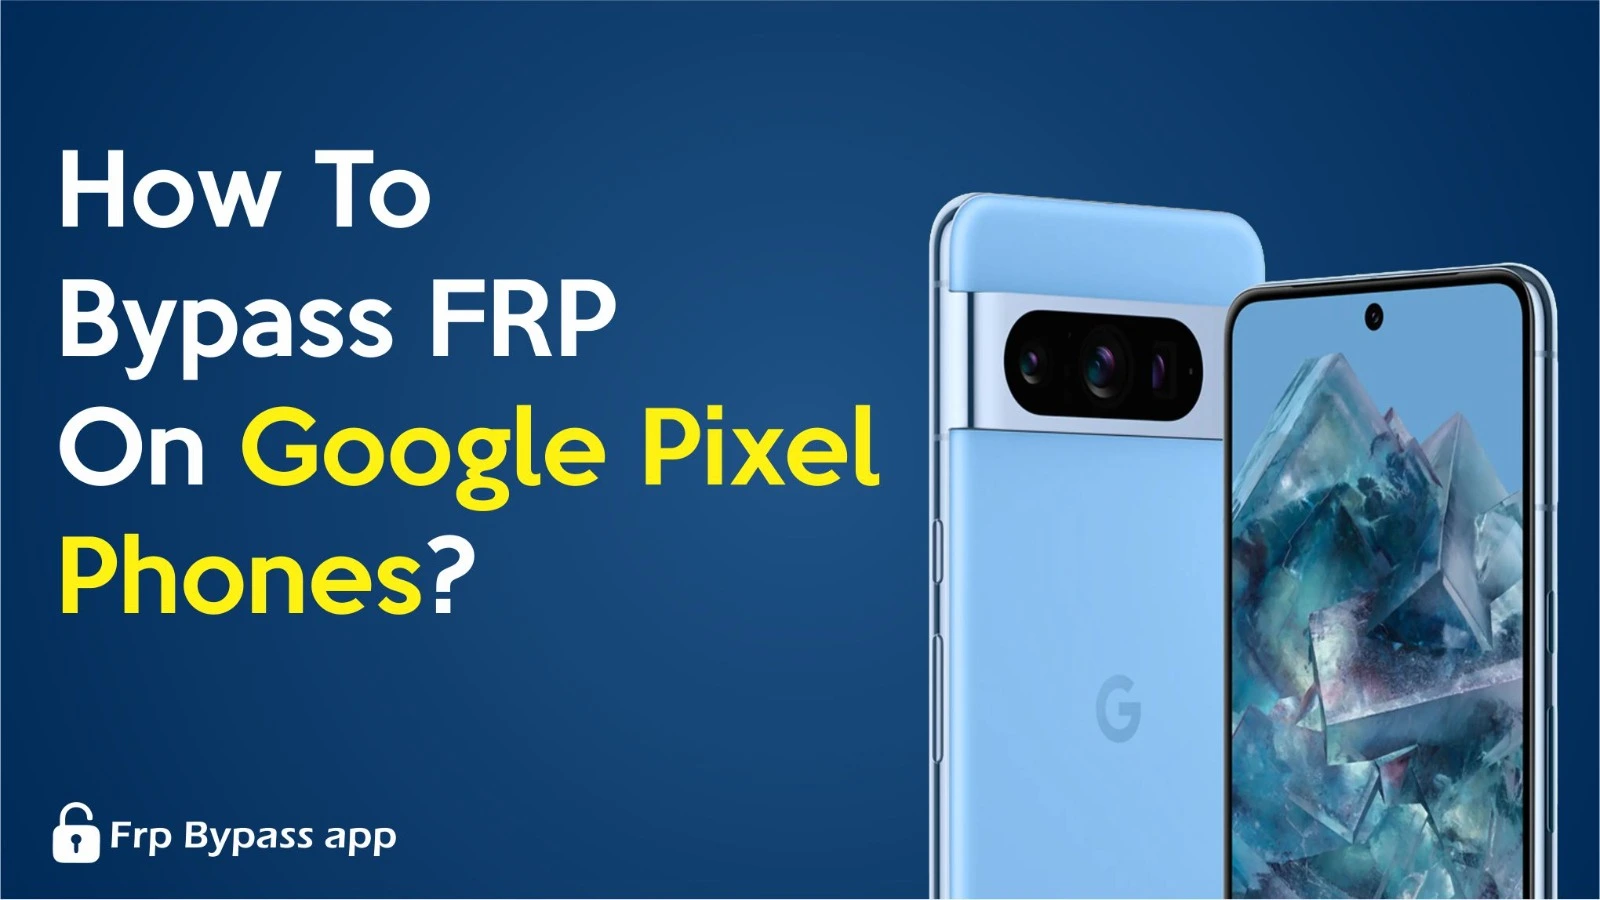 Bypass FRP On Google Pixel Phones image